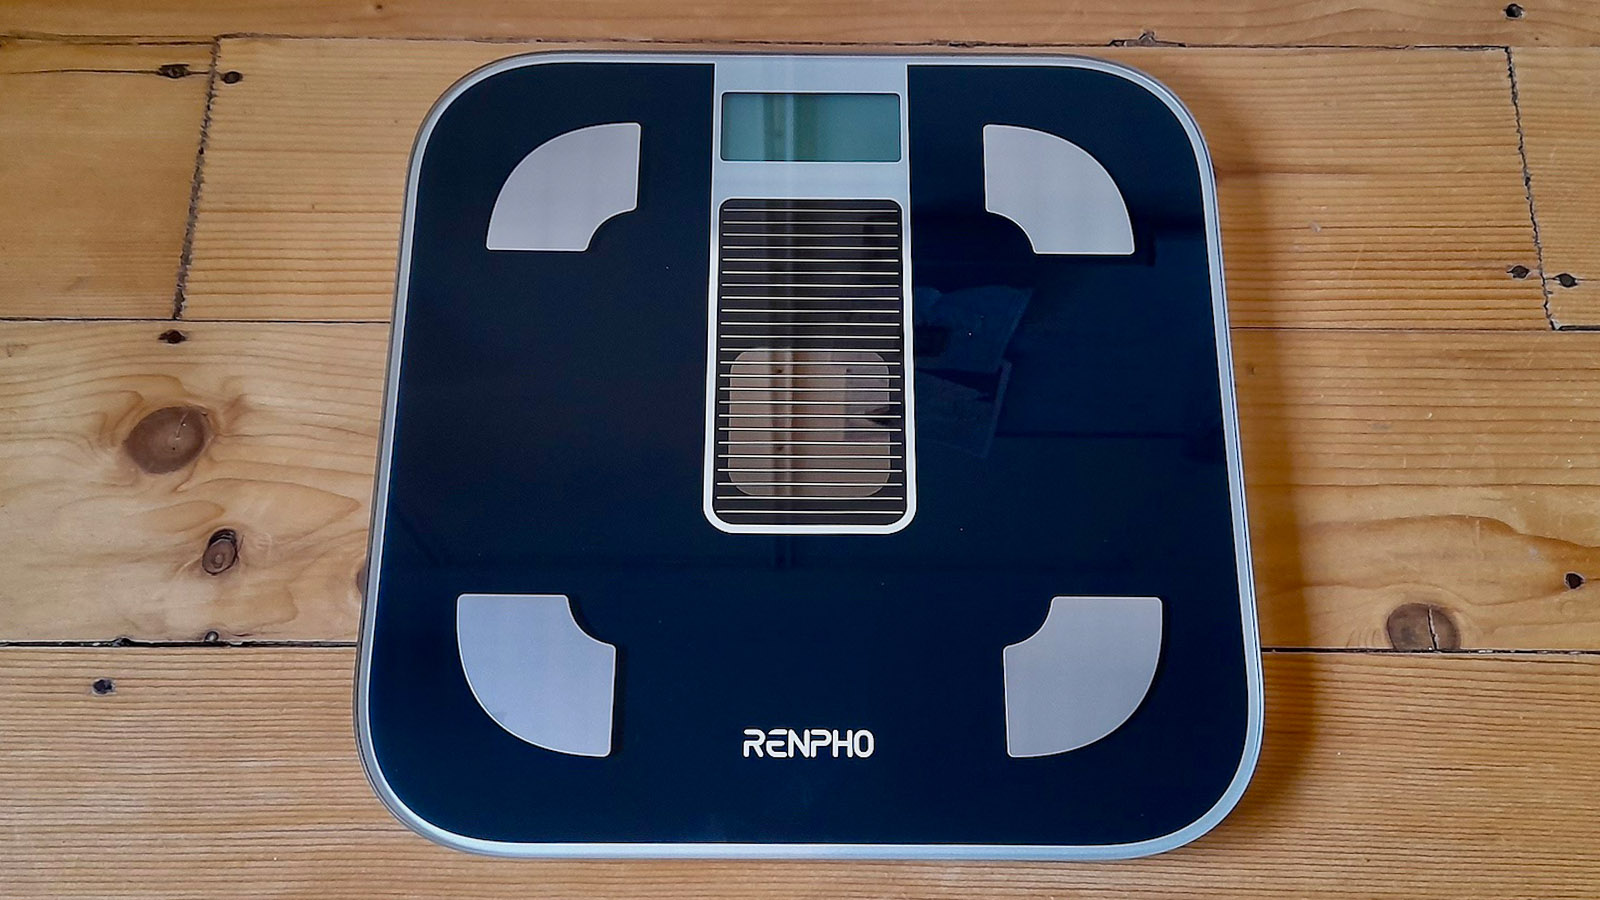  Renpho Elis Solar Smart Body Scale -- Best charging method